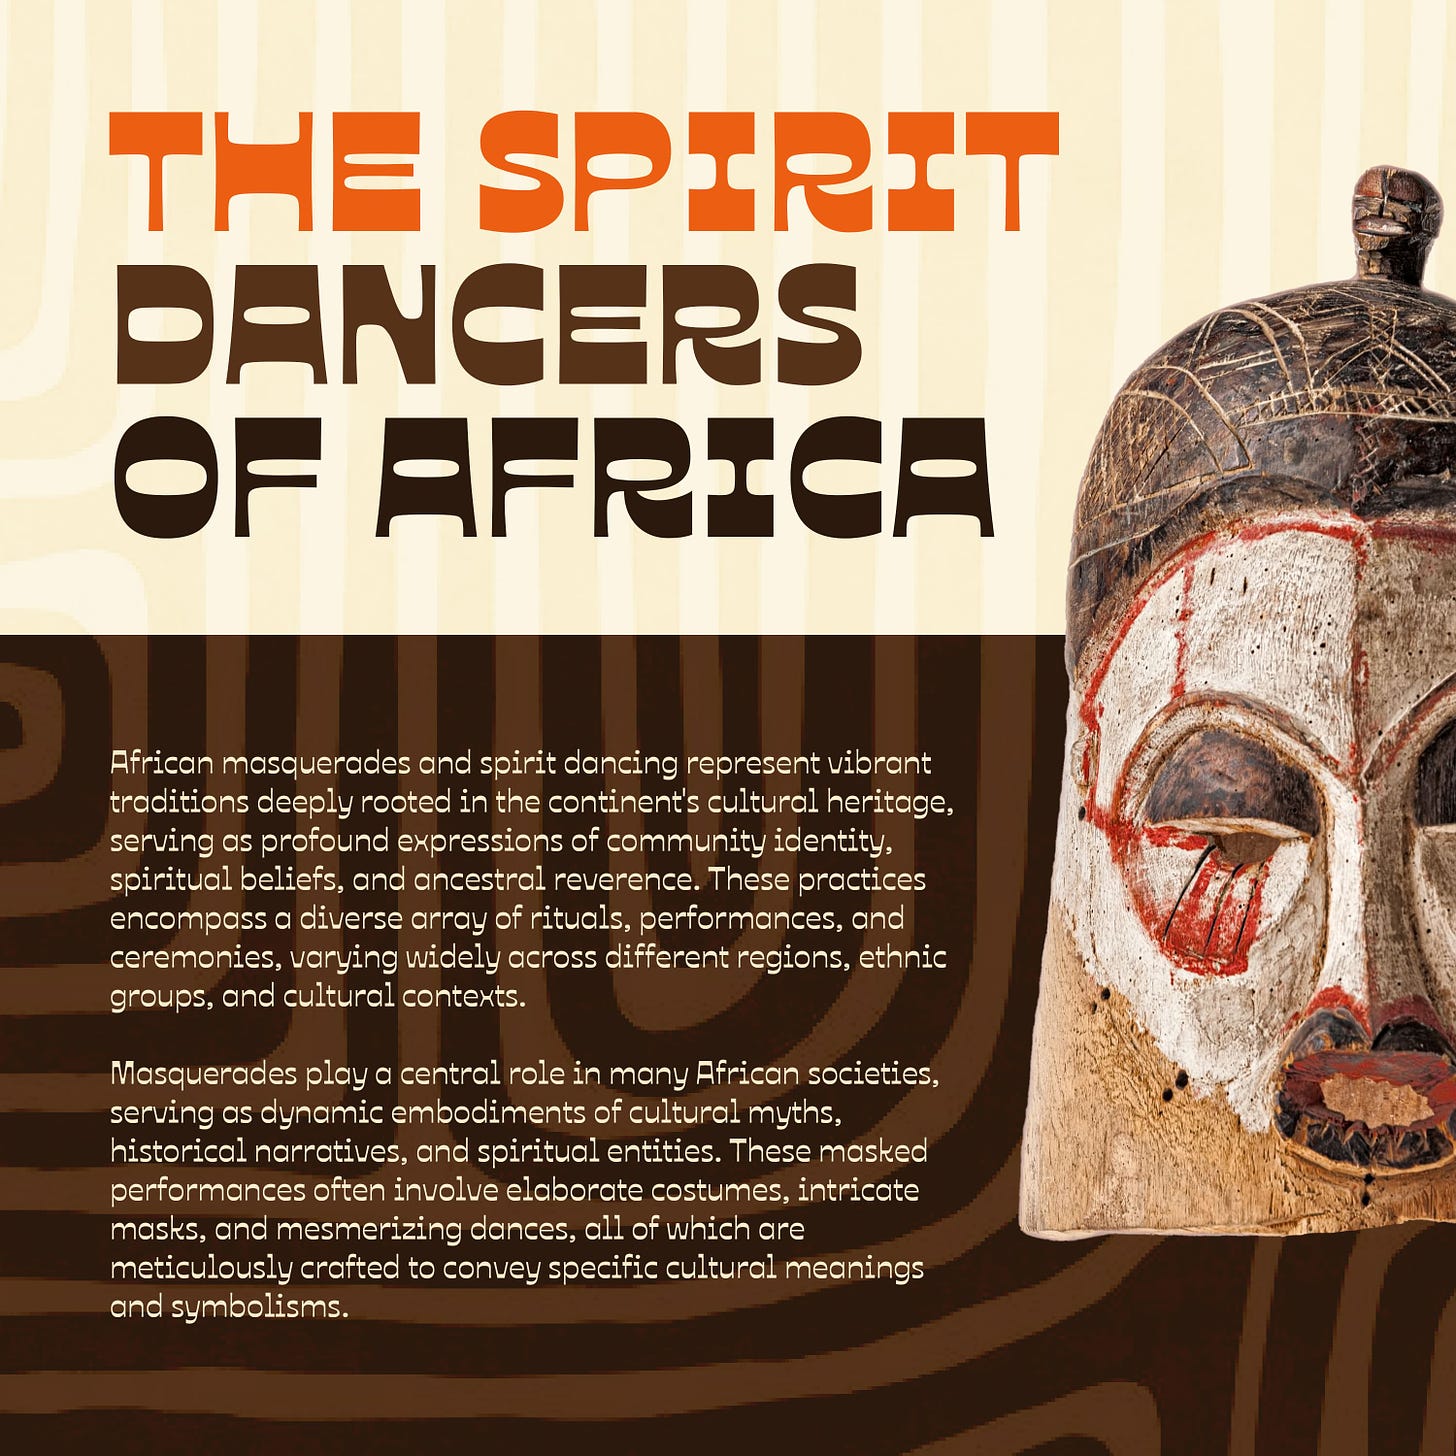 The Spirit Dancers of Africa - Ojuju Typeface by Chisaokwu Joboson